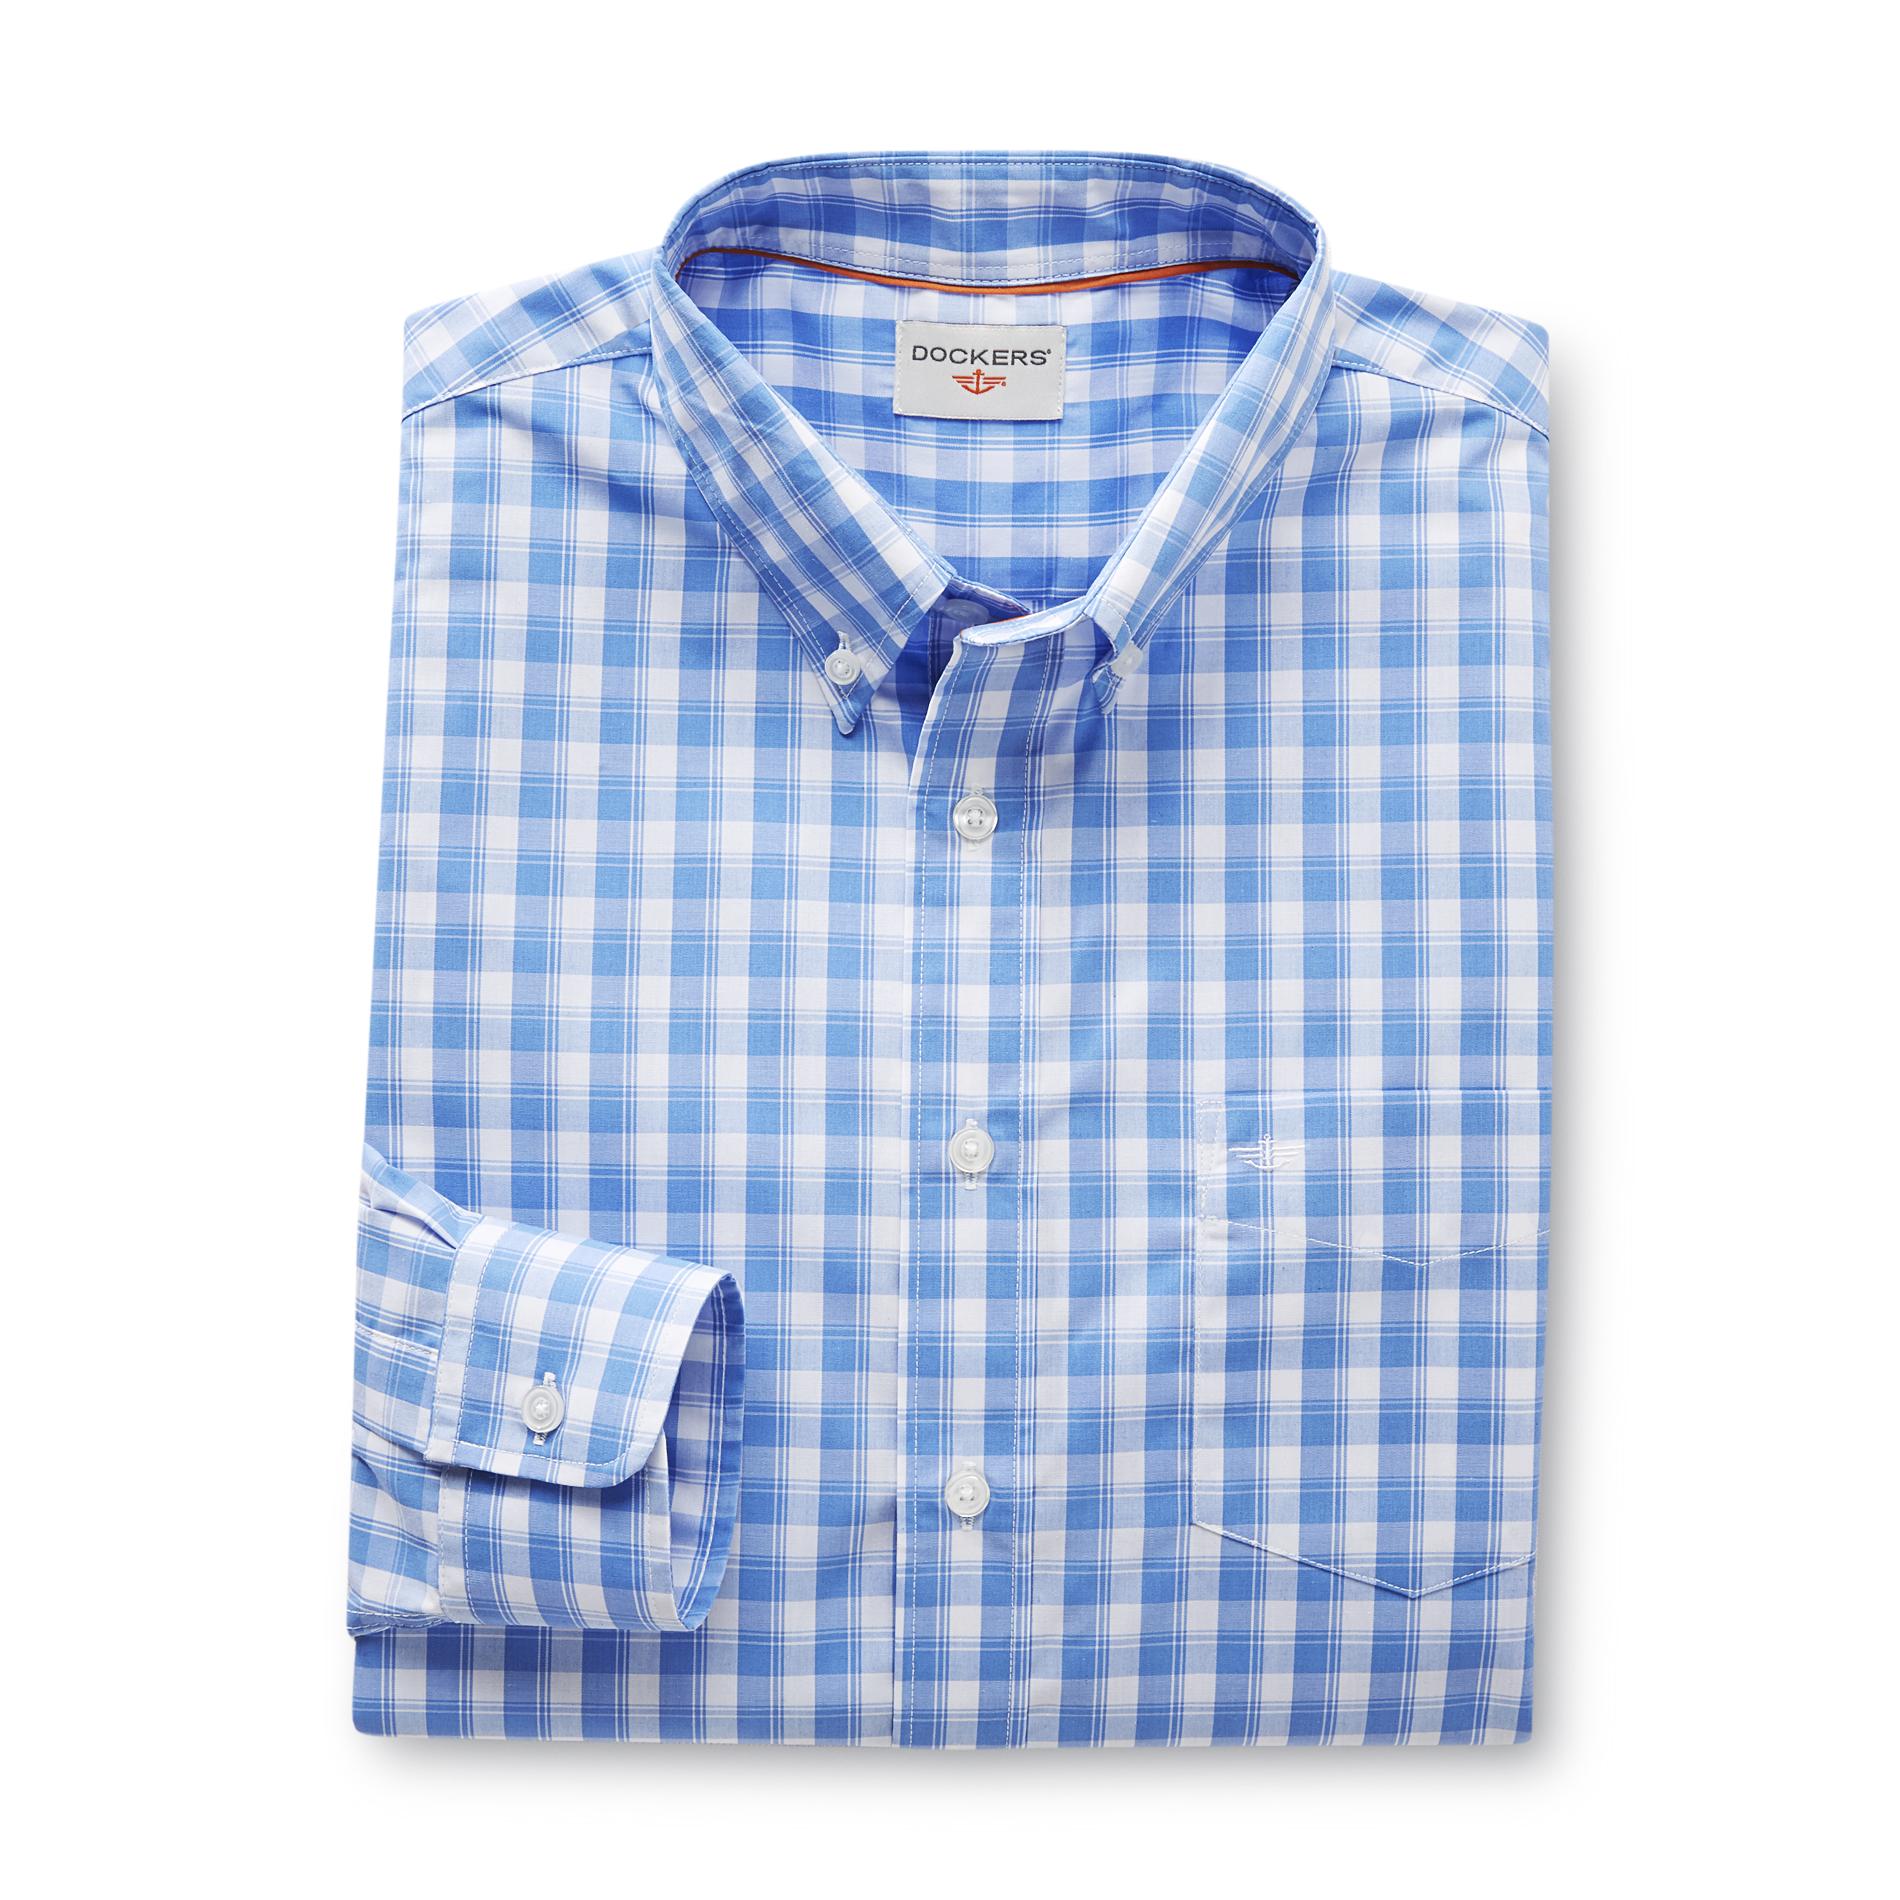 Dockers Men's Long-Sleeve No Wrinkle Dress Shirt - Gingham